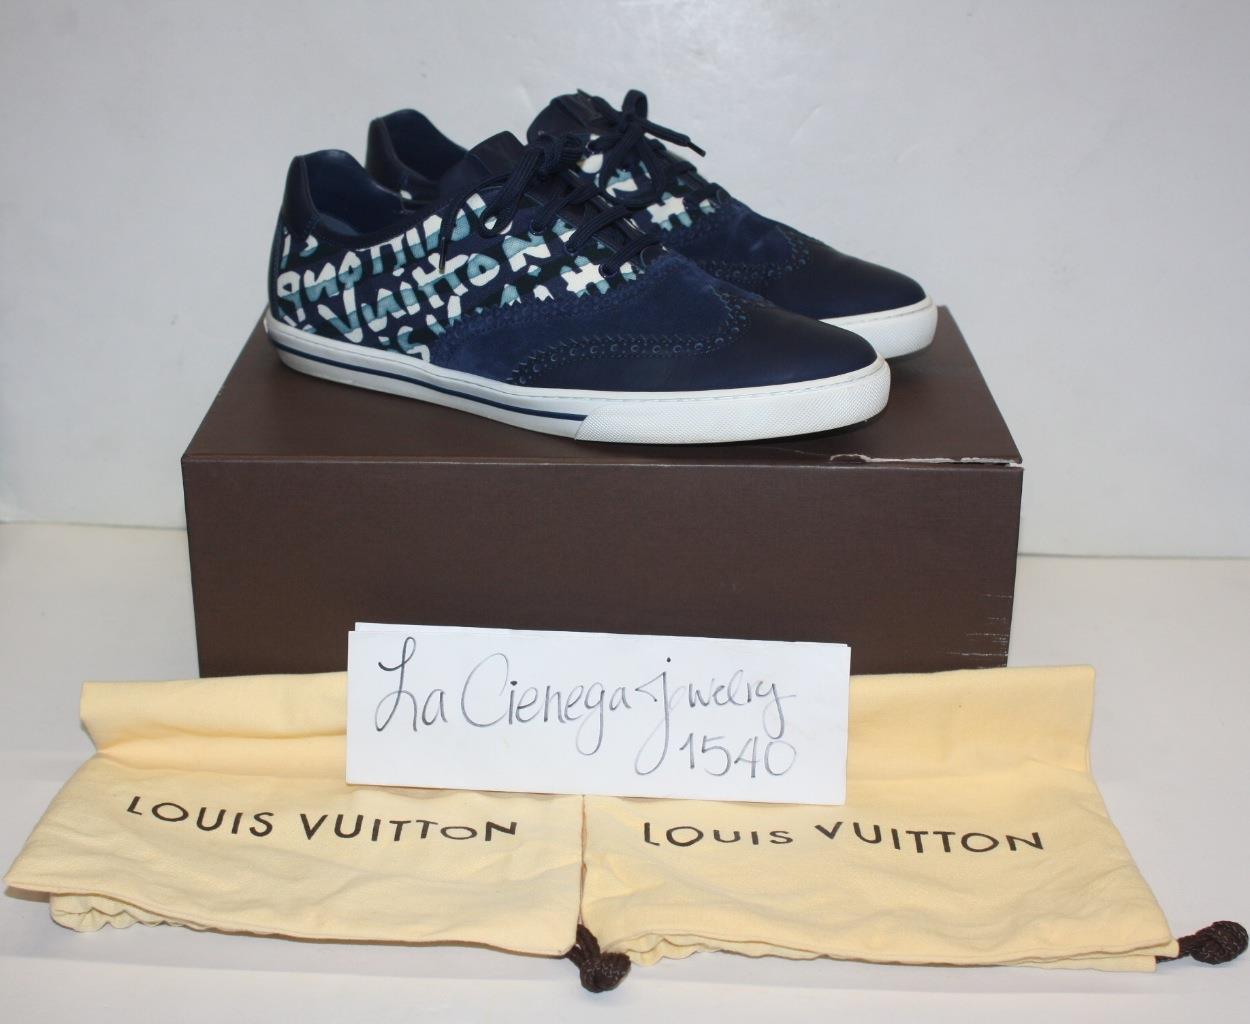 Louis Vuitton Blue Suede Wingtip Low-top Sneakers Size 9.5 / 10.5 US | eBay